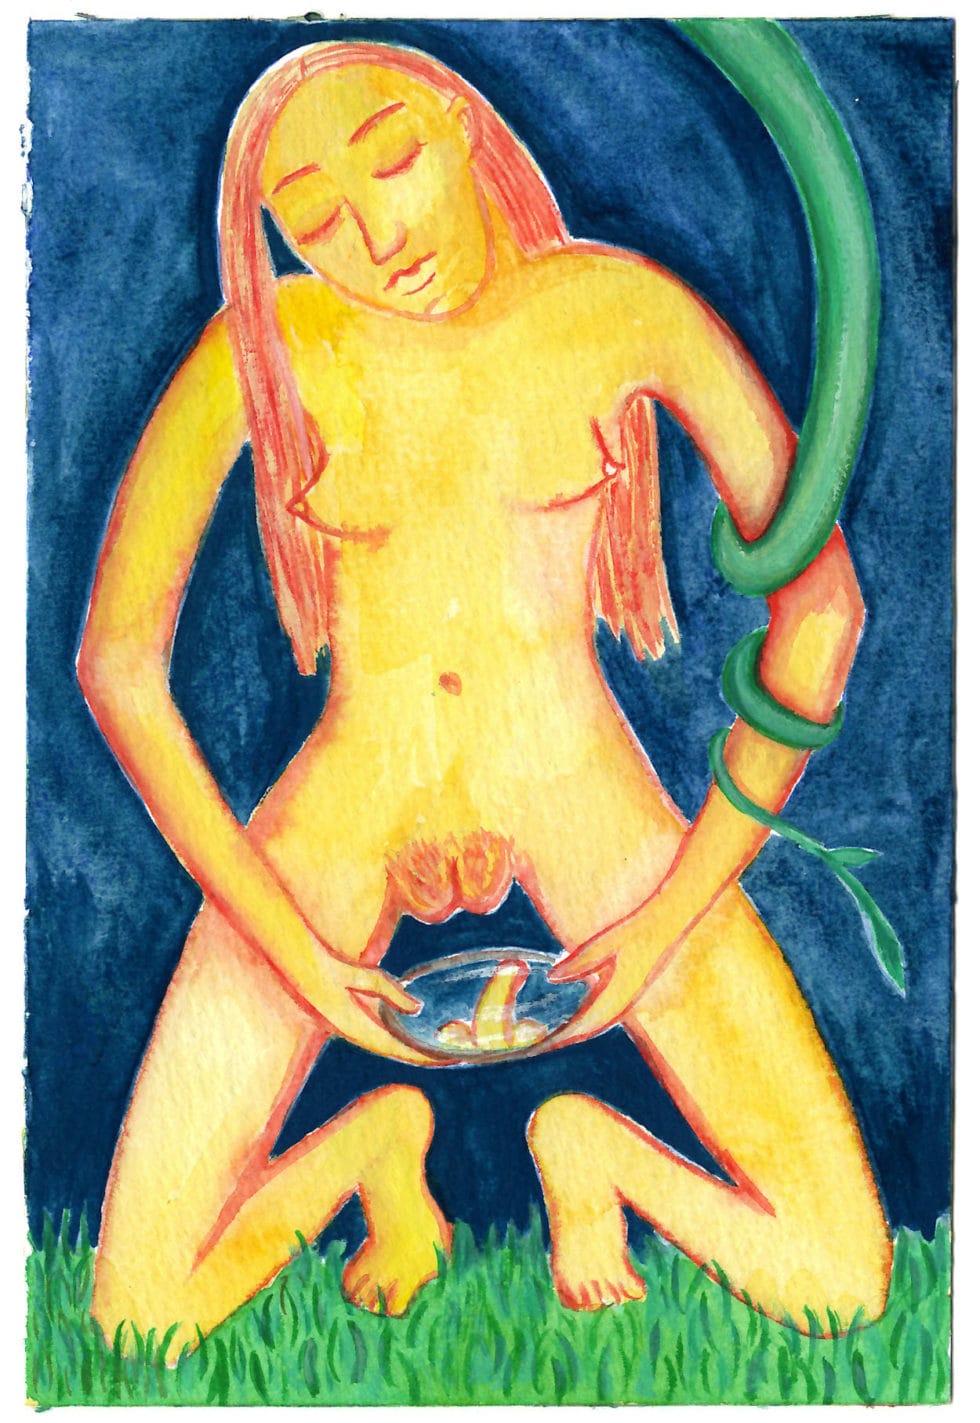 Cecilia Granara, trans.form, looking in the mirror, 2020, 61x46cm, aquarelle et gouache ©